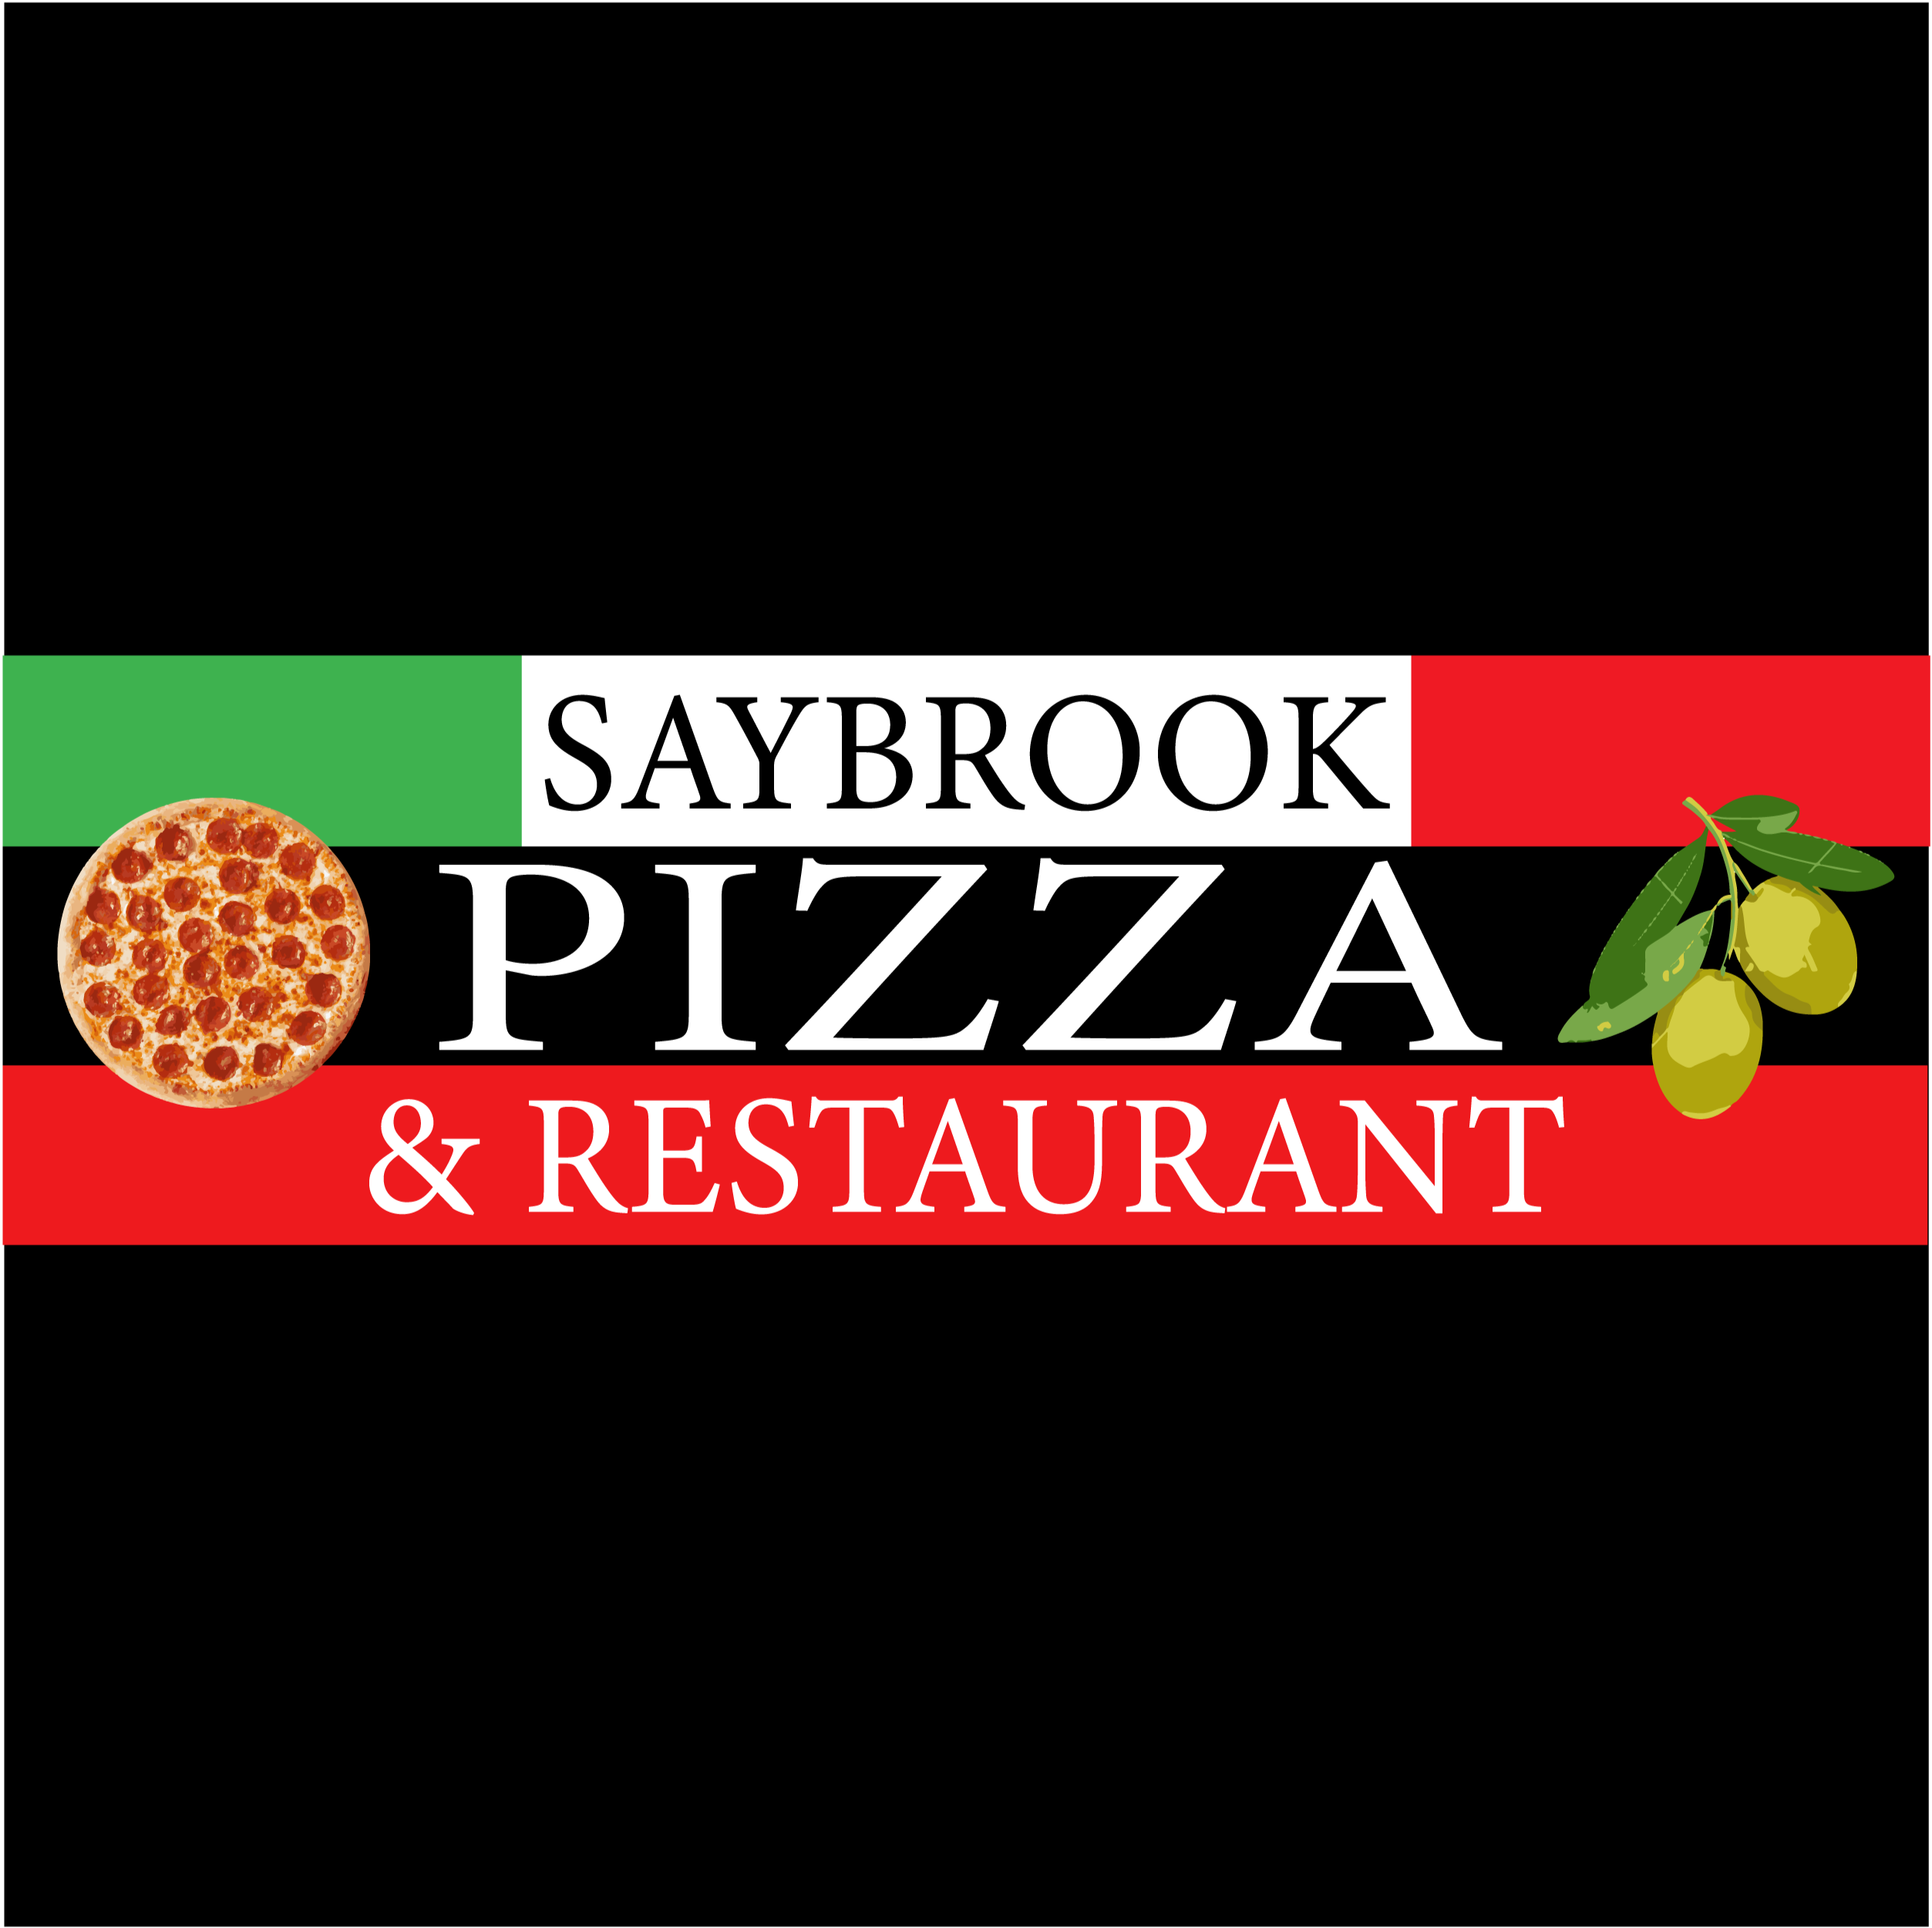 Saybrook Pizza & Restaurant - Order Online - Delivery - Old Saybrook